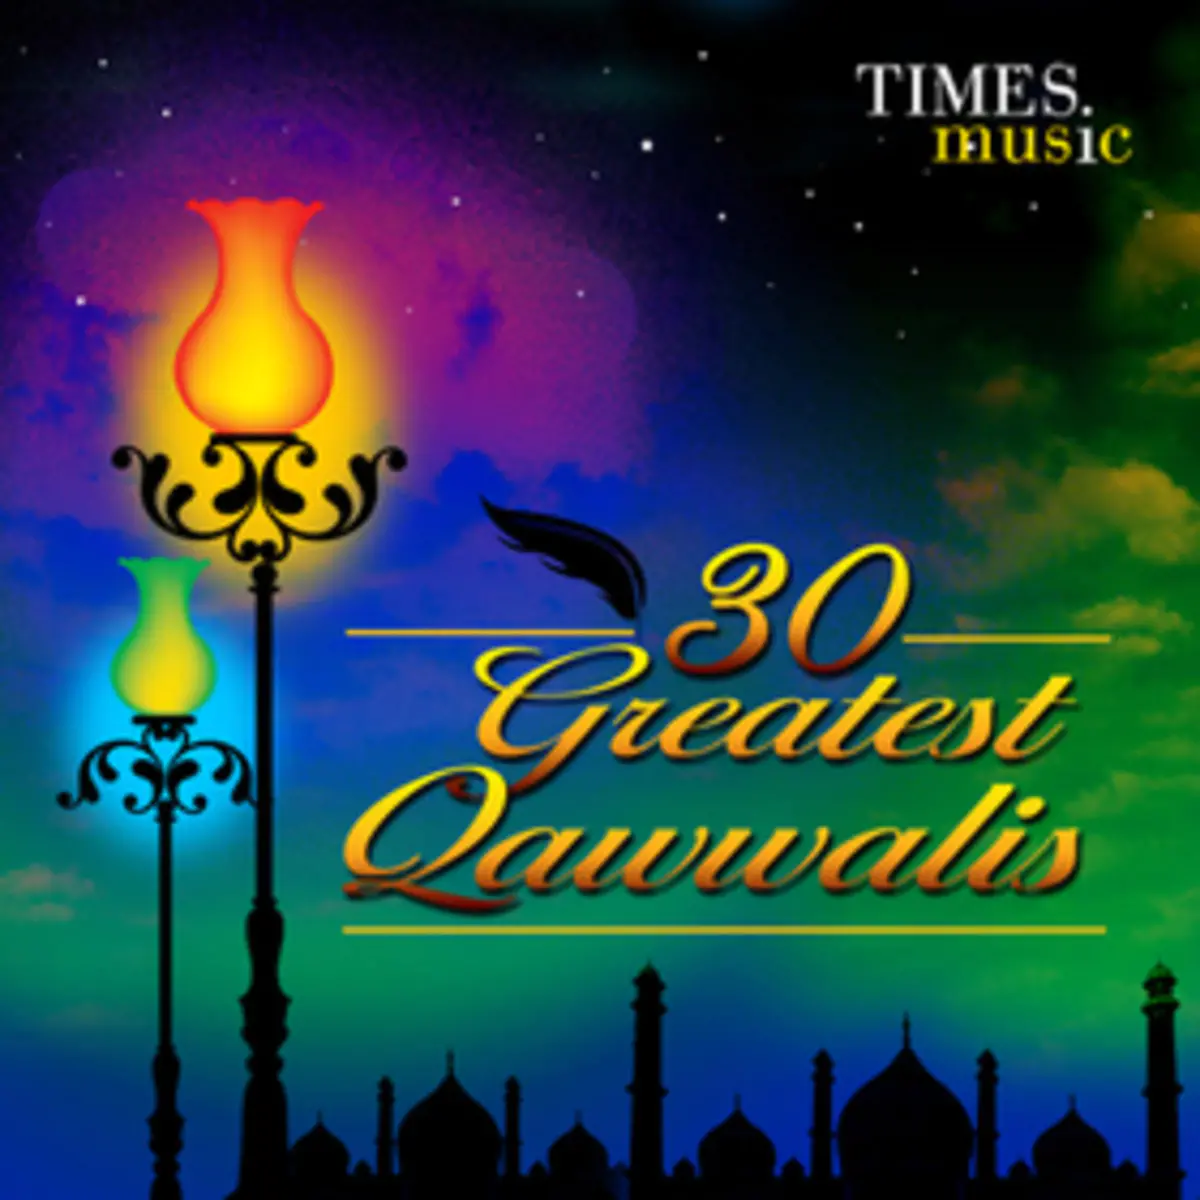 30 Greatest Qawwalis Songs Download 30 Greatest Qawwalis Mp3 Songs Online Free On Gaana Com